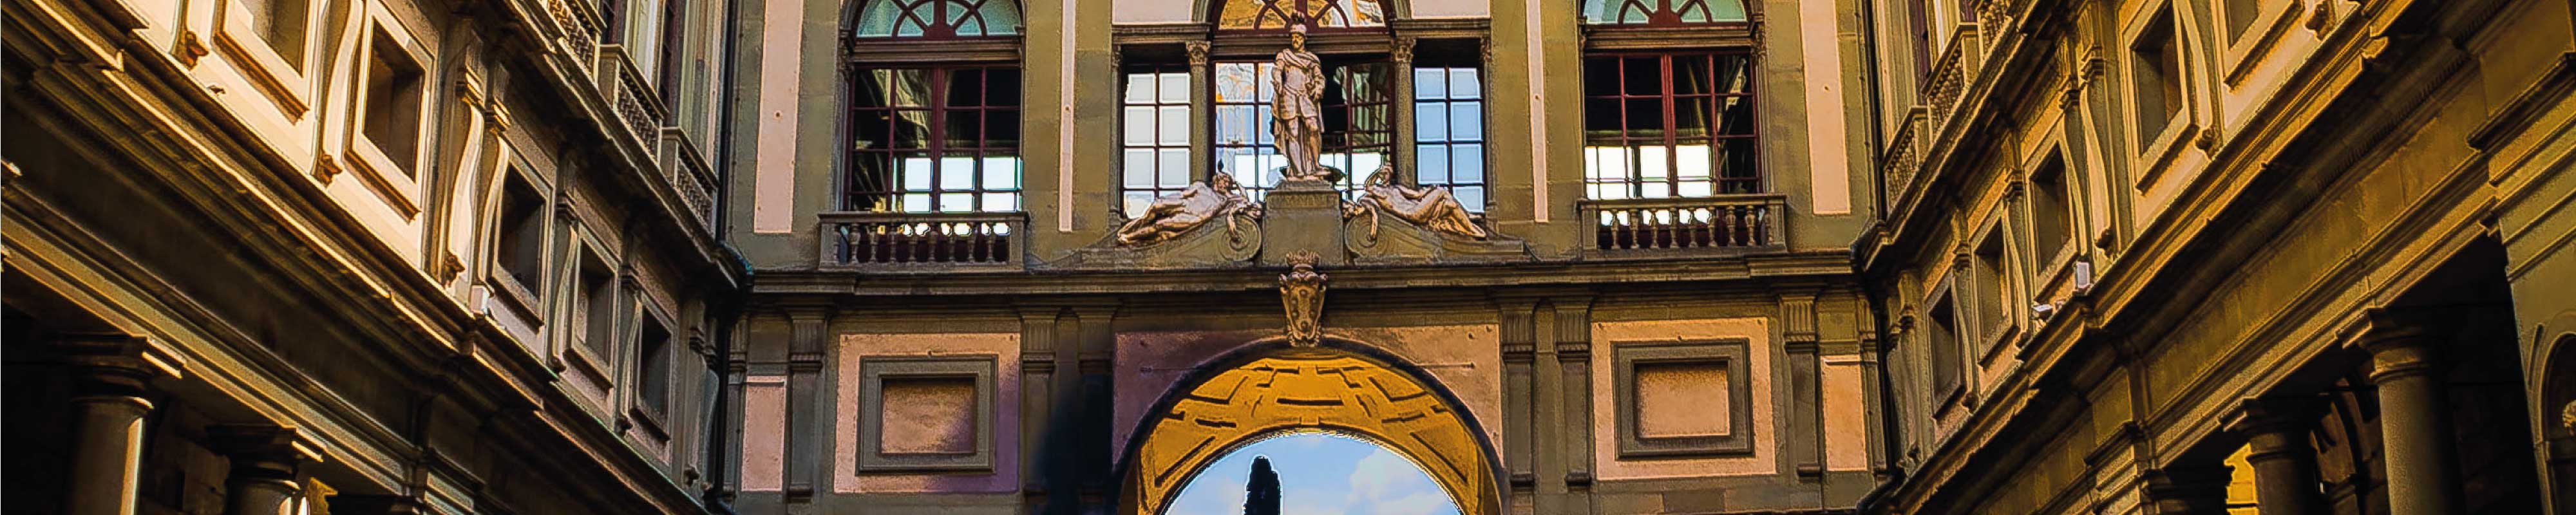 Consigna Equipaje | Galerìa Uffizi en Florencia - Nannybag